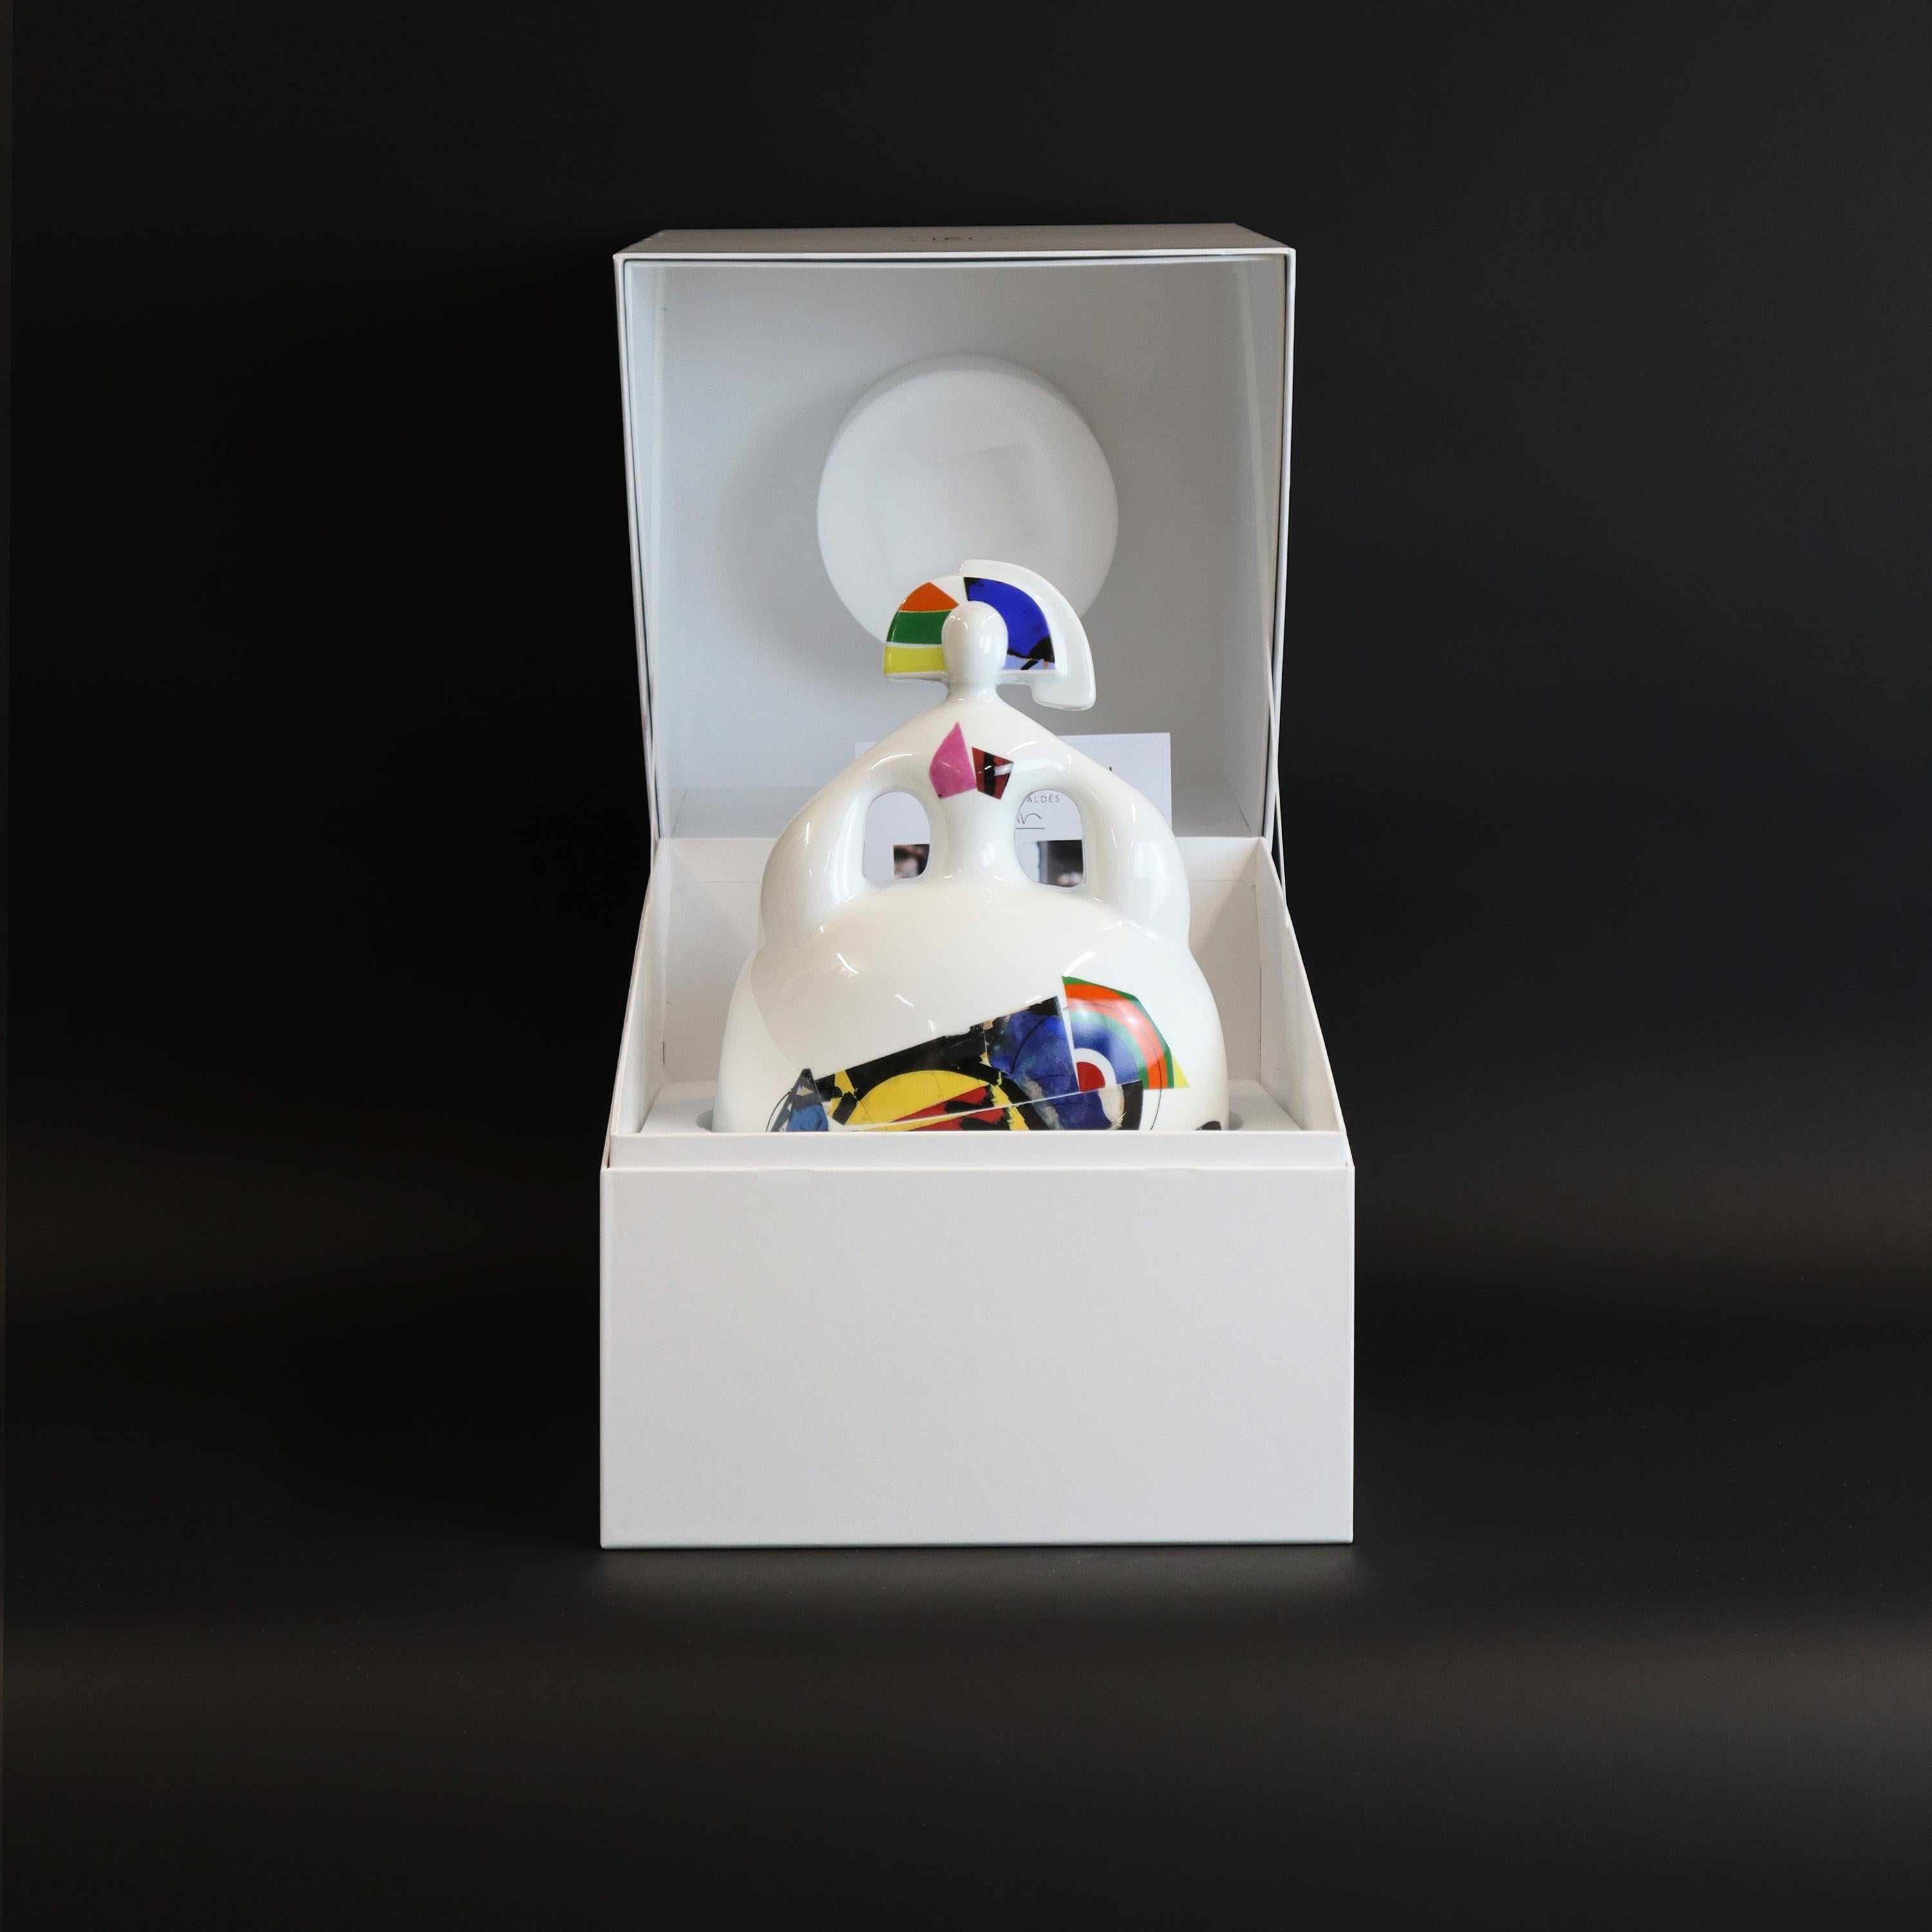 Reina Mariana III (Las Meninas), 2022, Valdés, porcelain sculptures For Sale 1